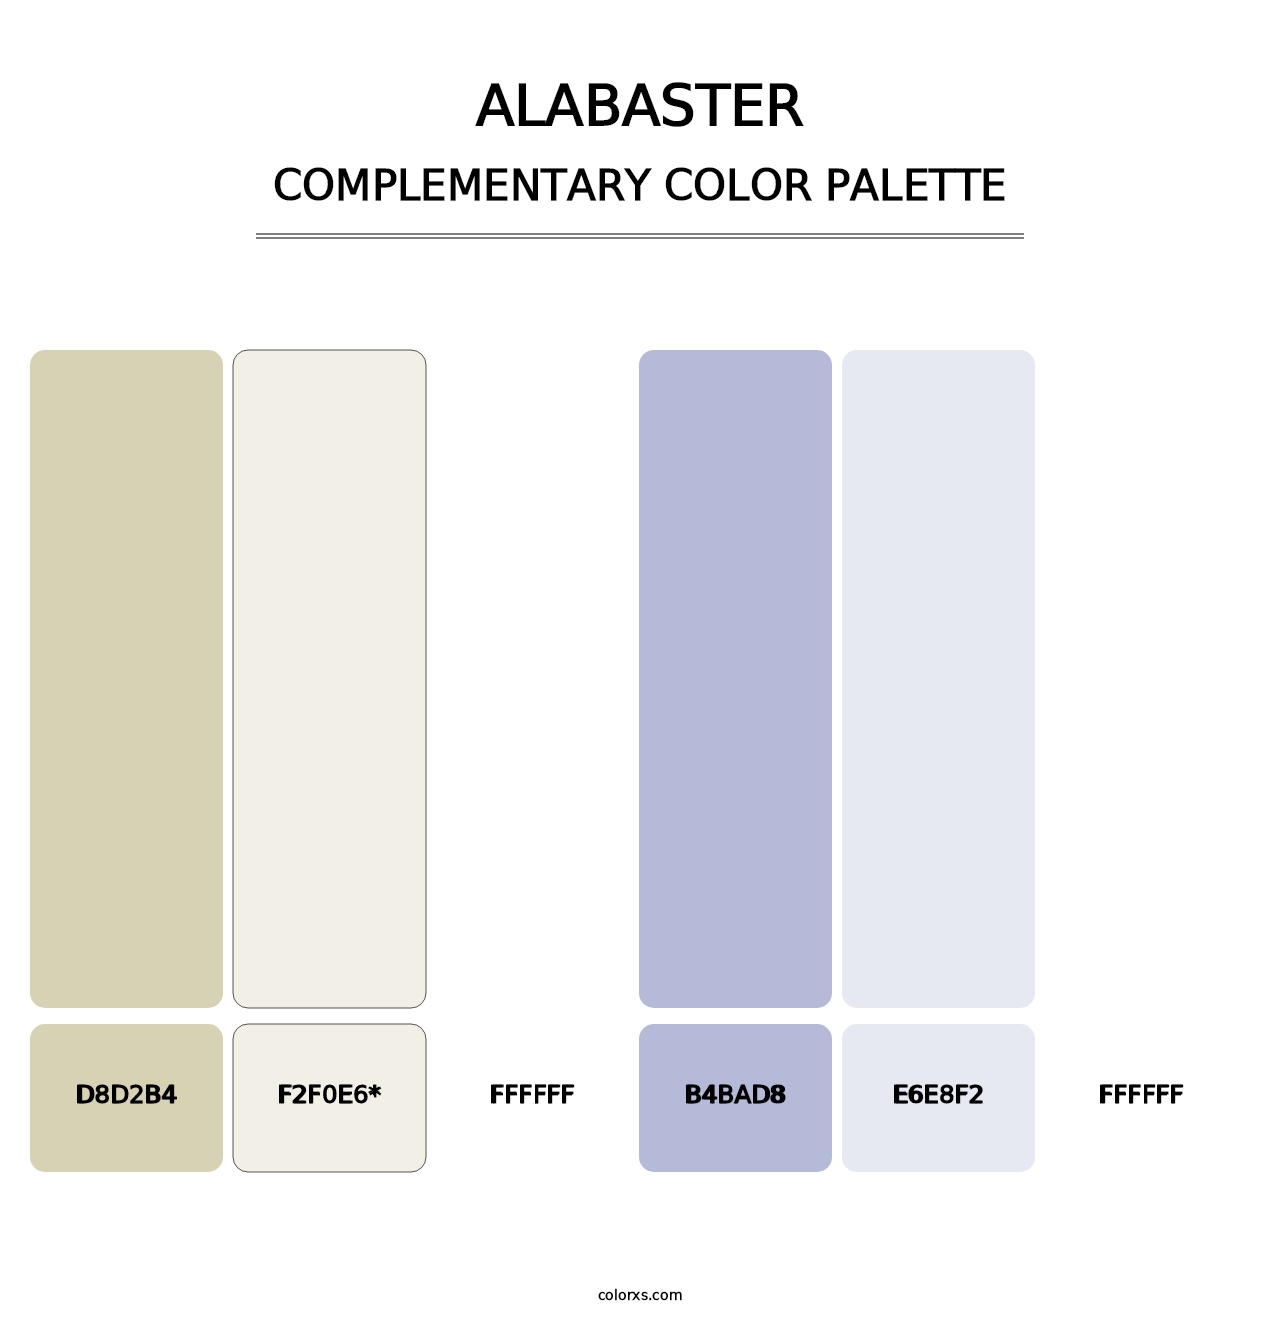 Alabaster - Complementary Color Palette